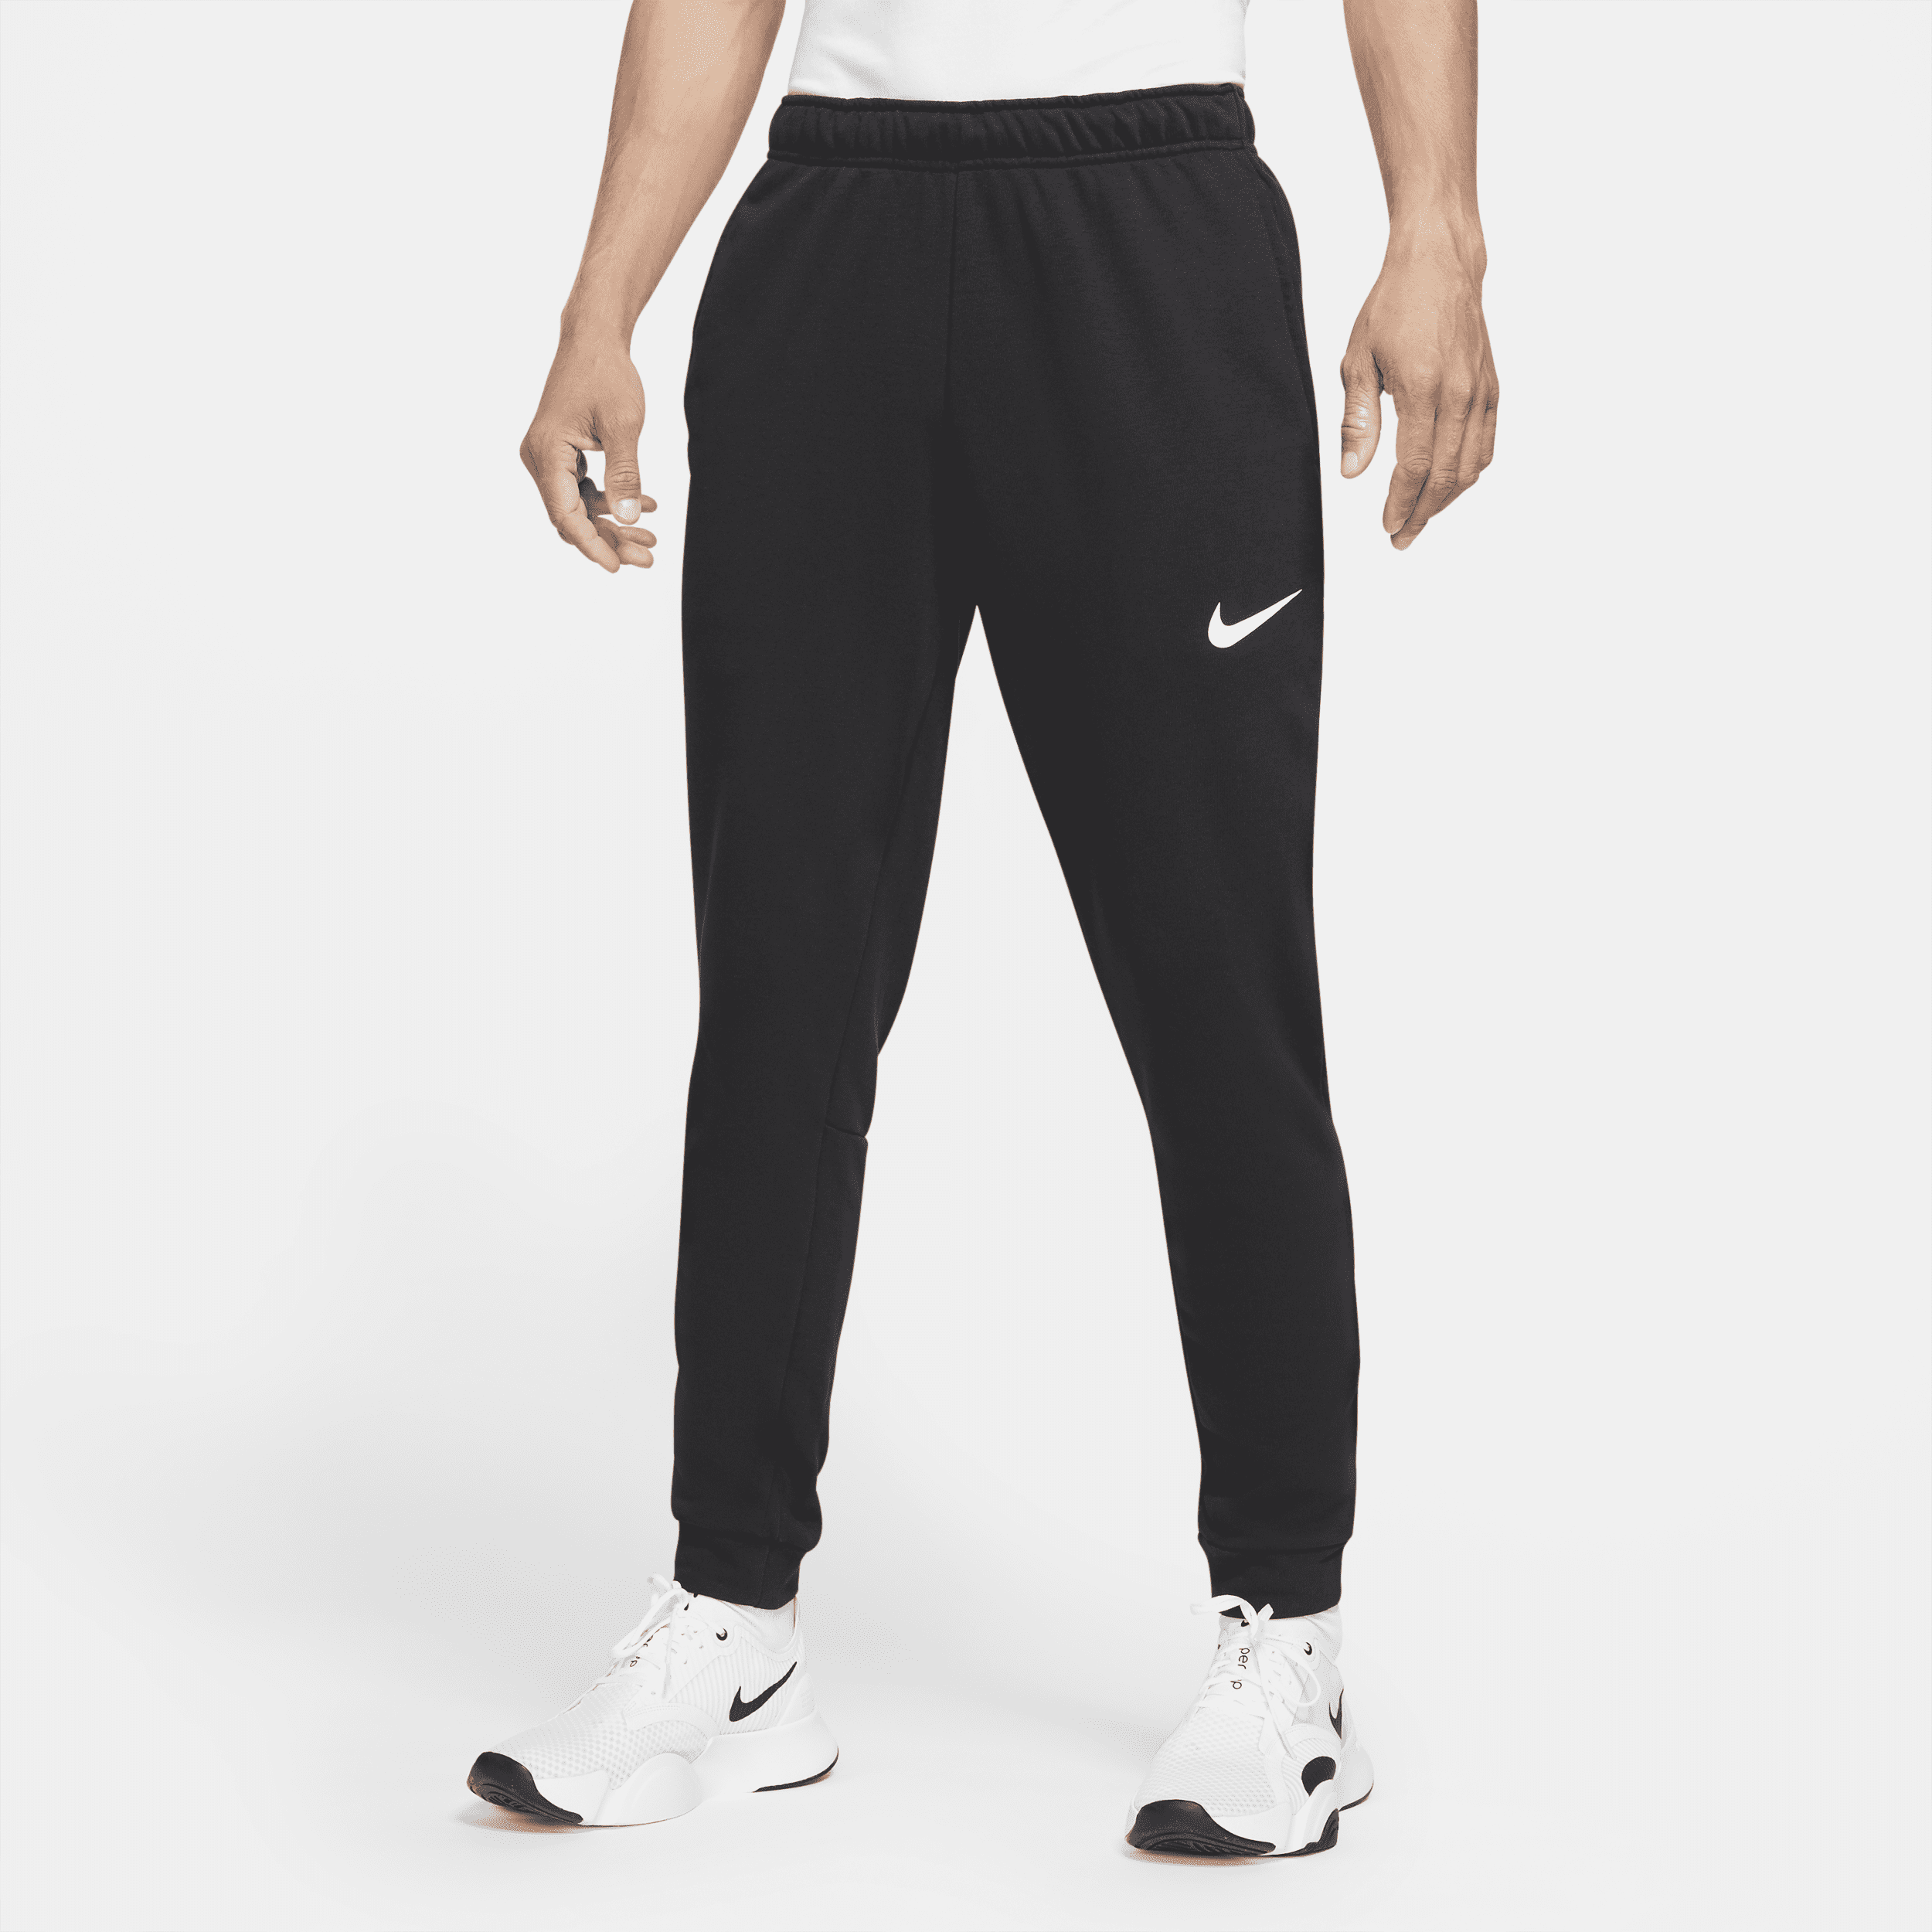 Pantaloni fitness Dri-FIT affusolati in fleece Nike Dry – Uomo - Nero